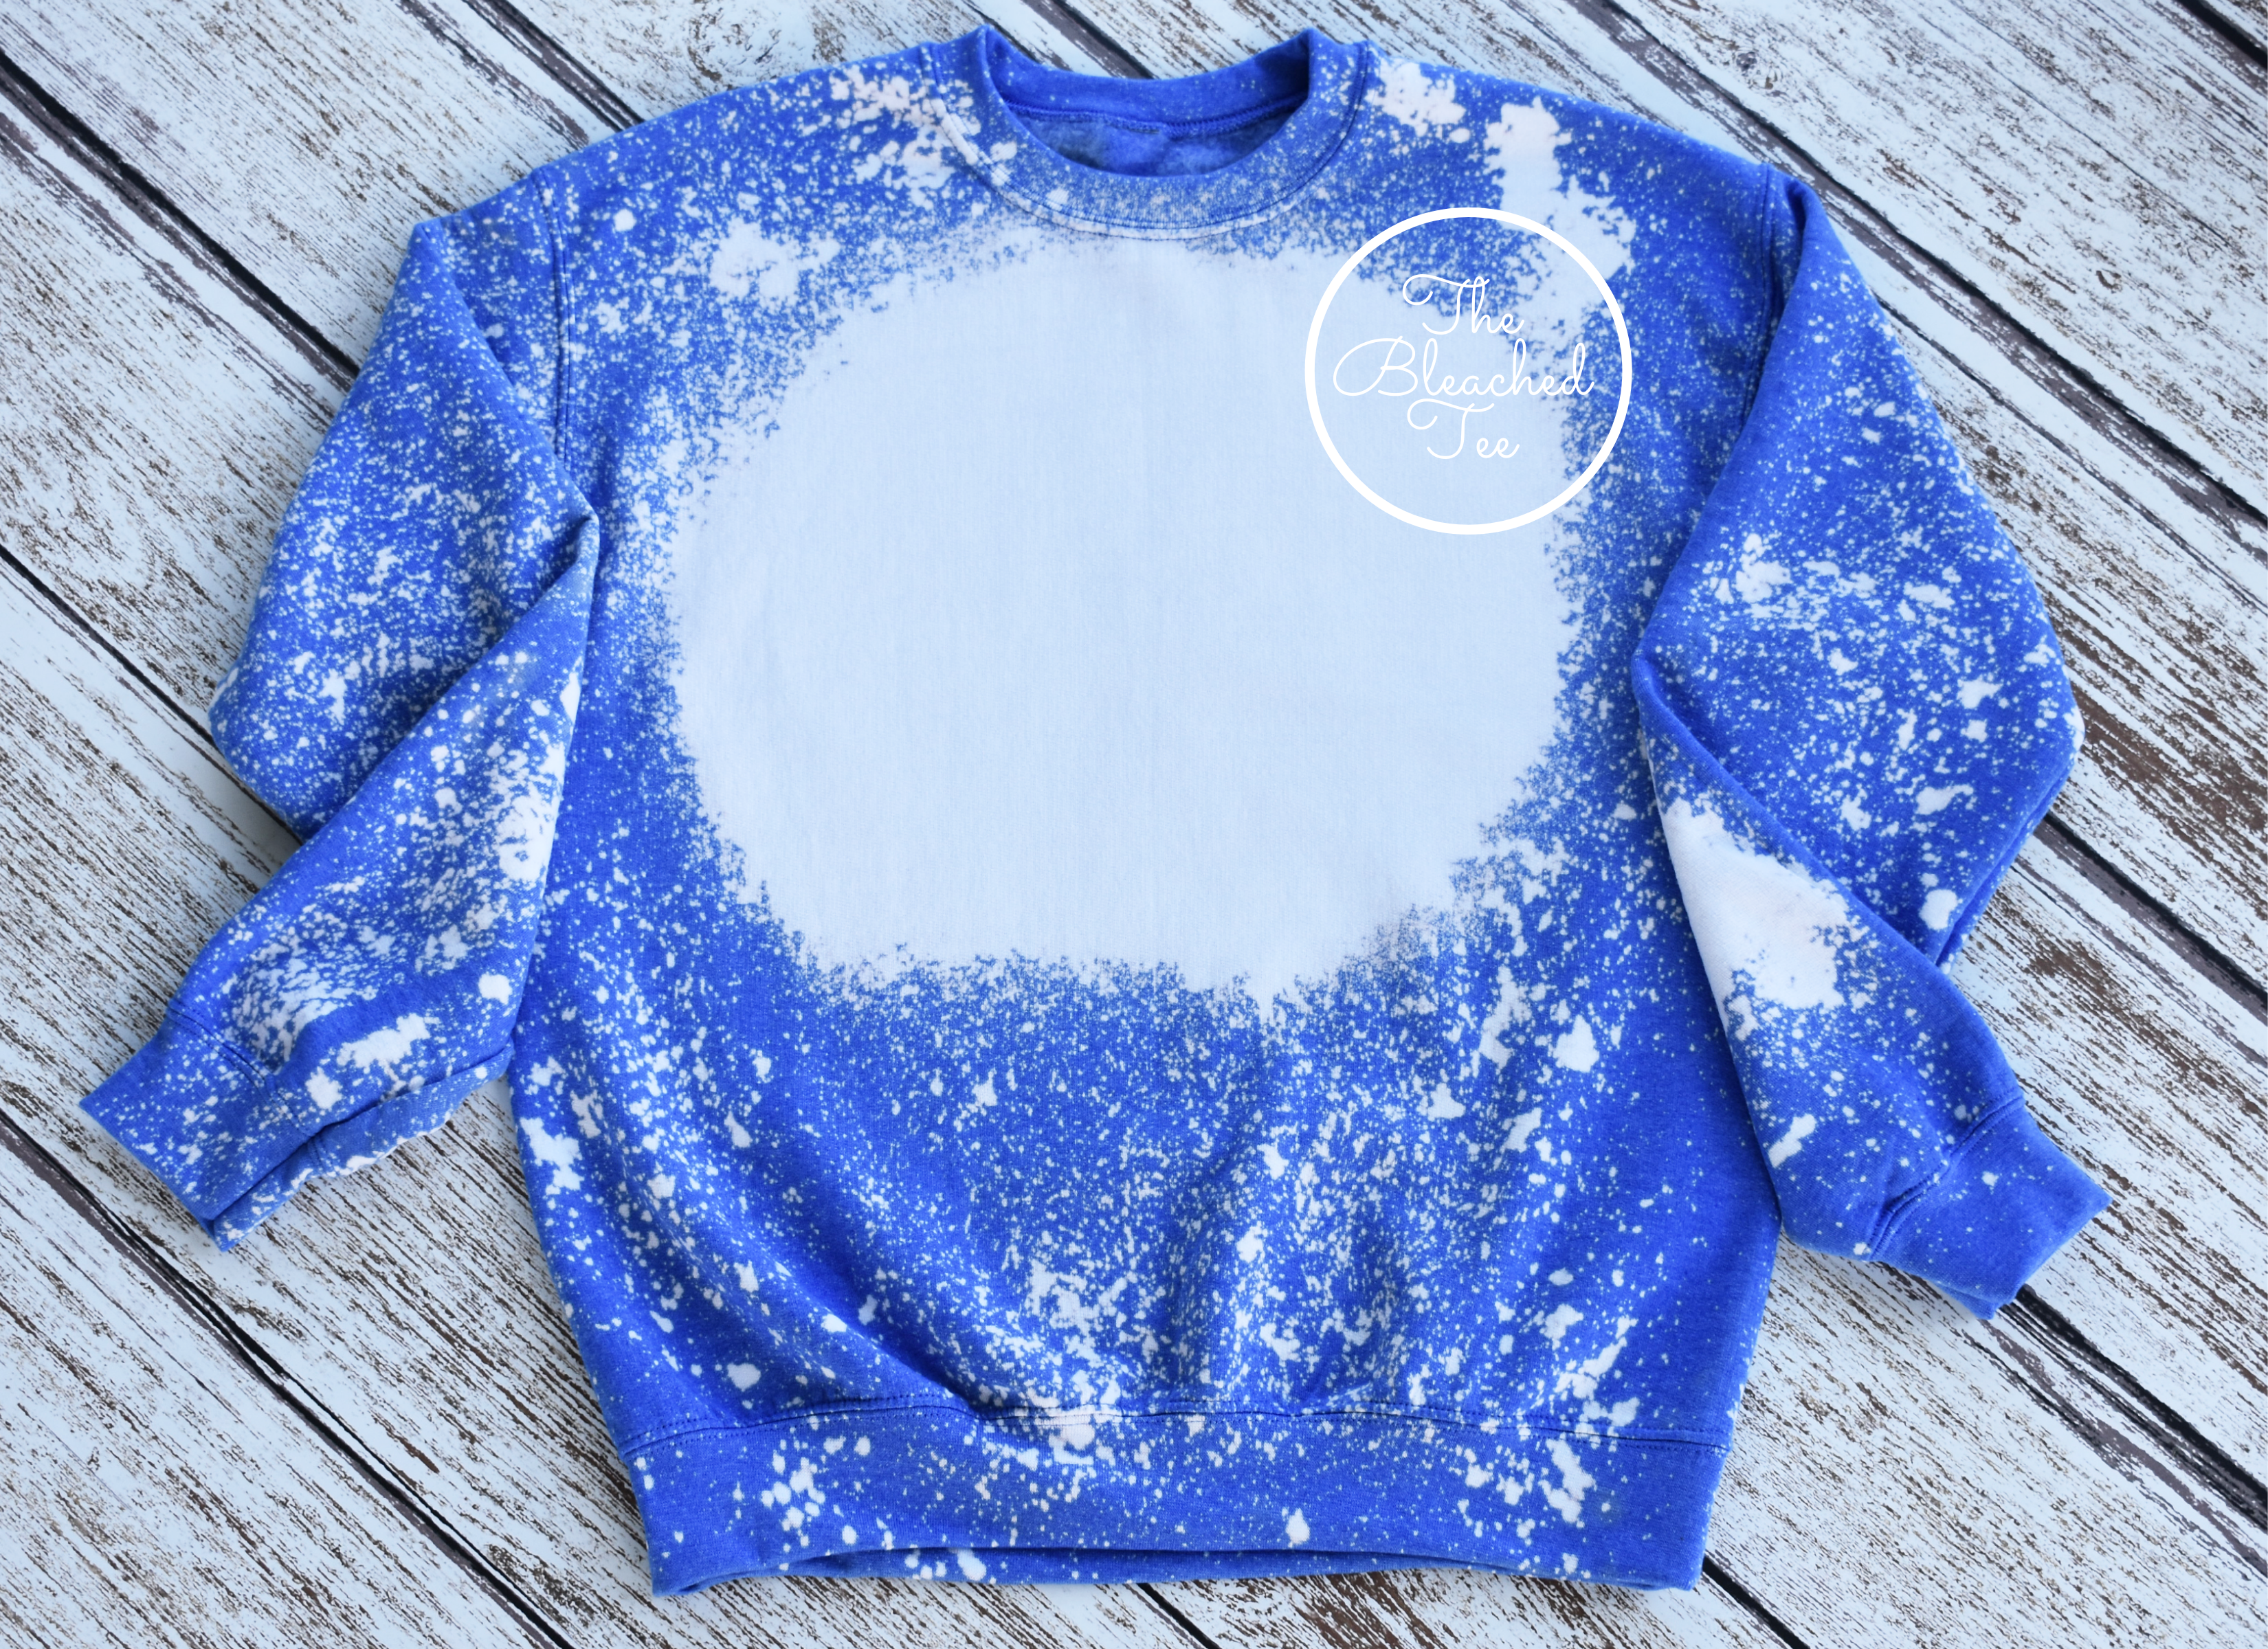 Polyester Sweatshirt For Sublimation Mama Sweatshirts For Women